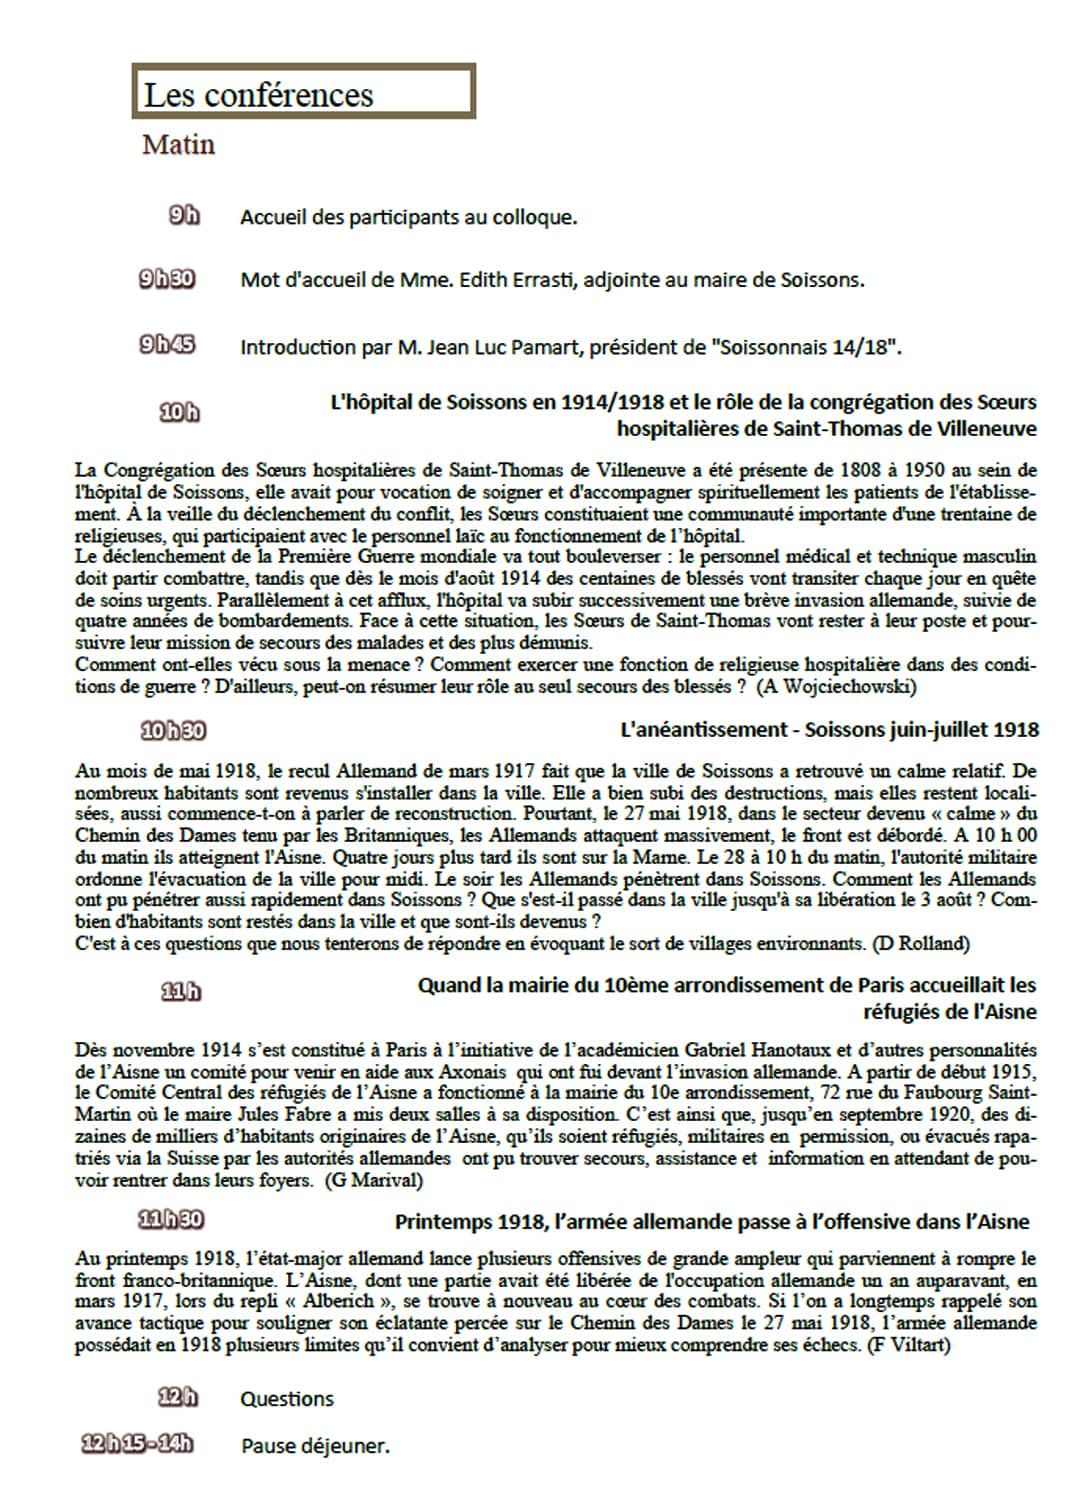 180526 - Conférence à Soissons (031)-min.jpg